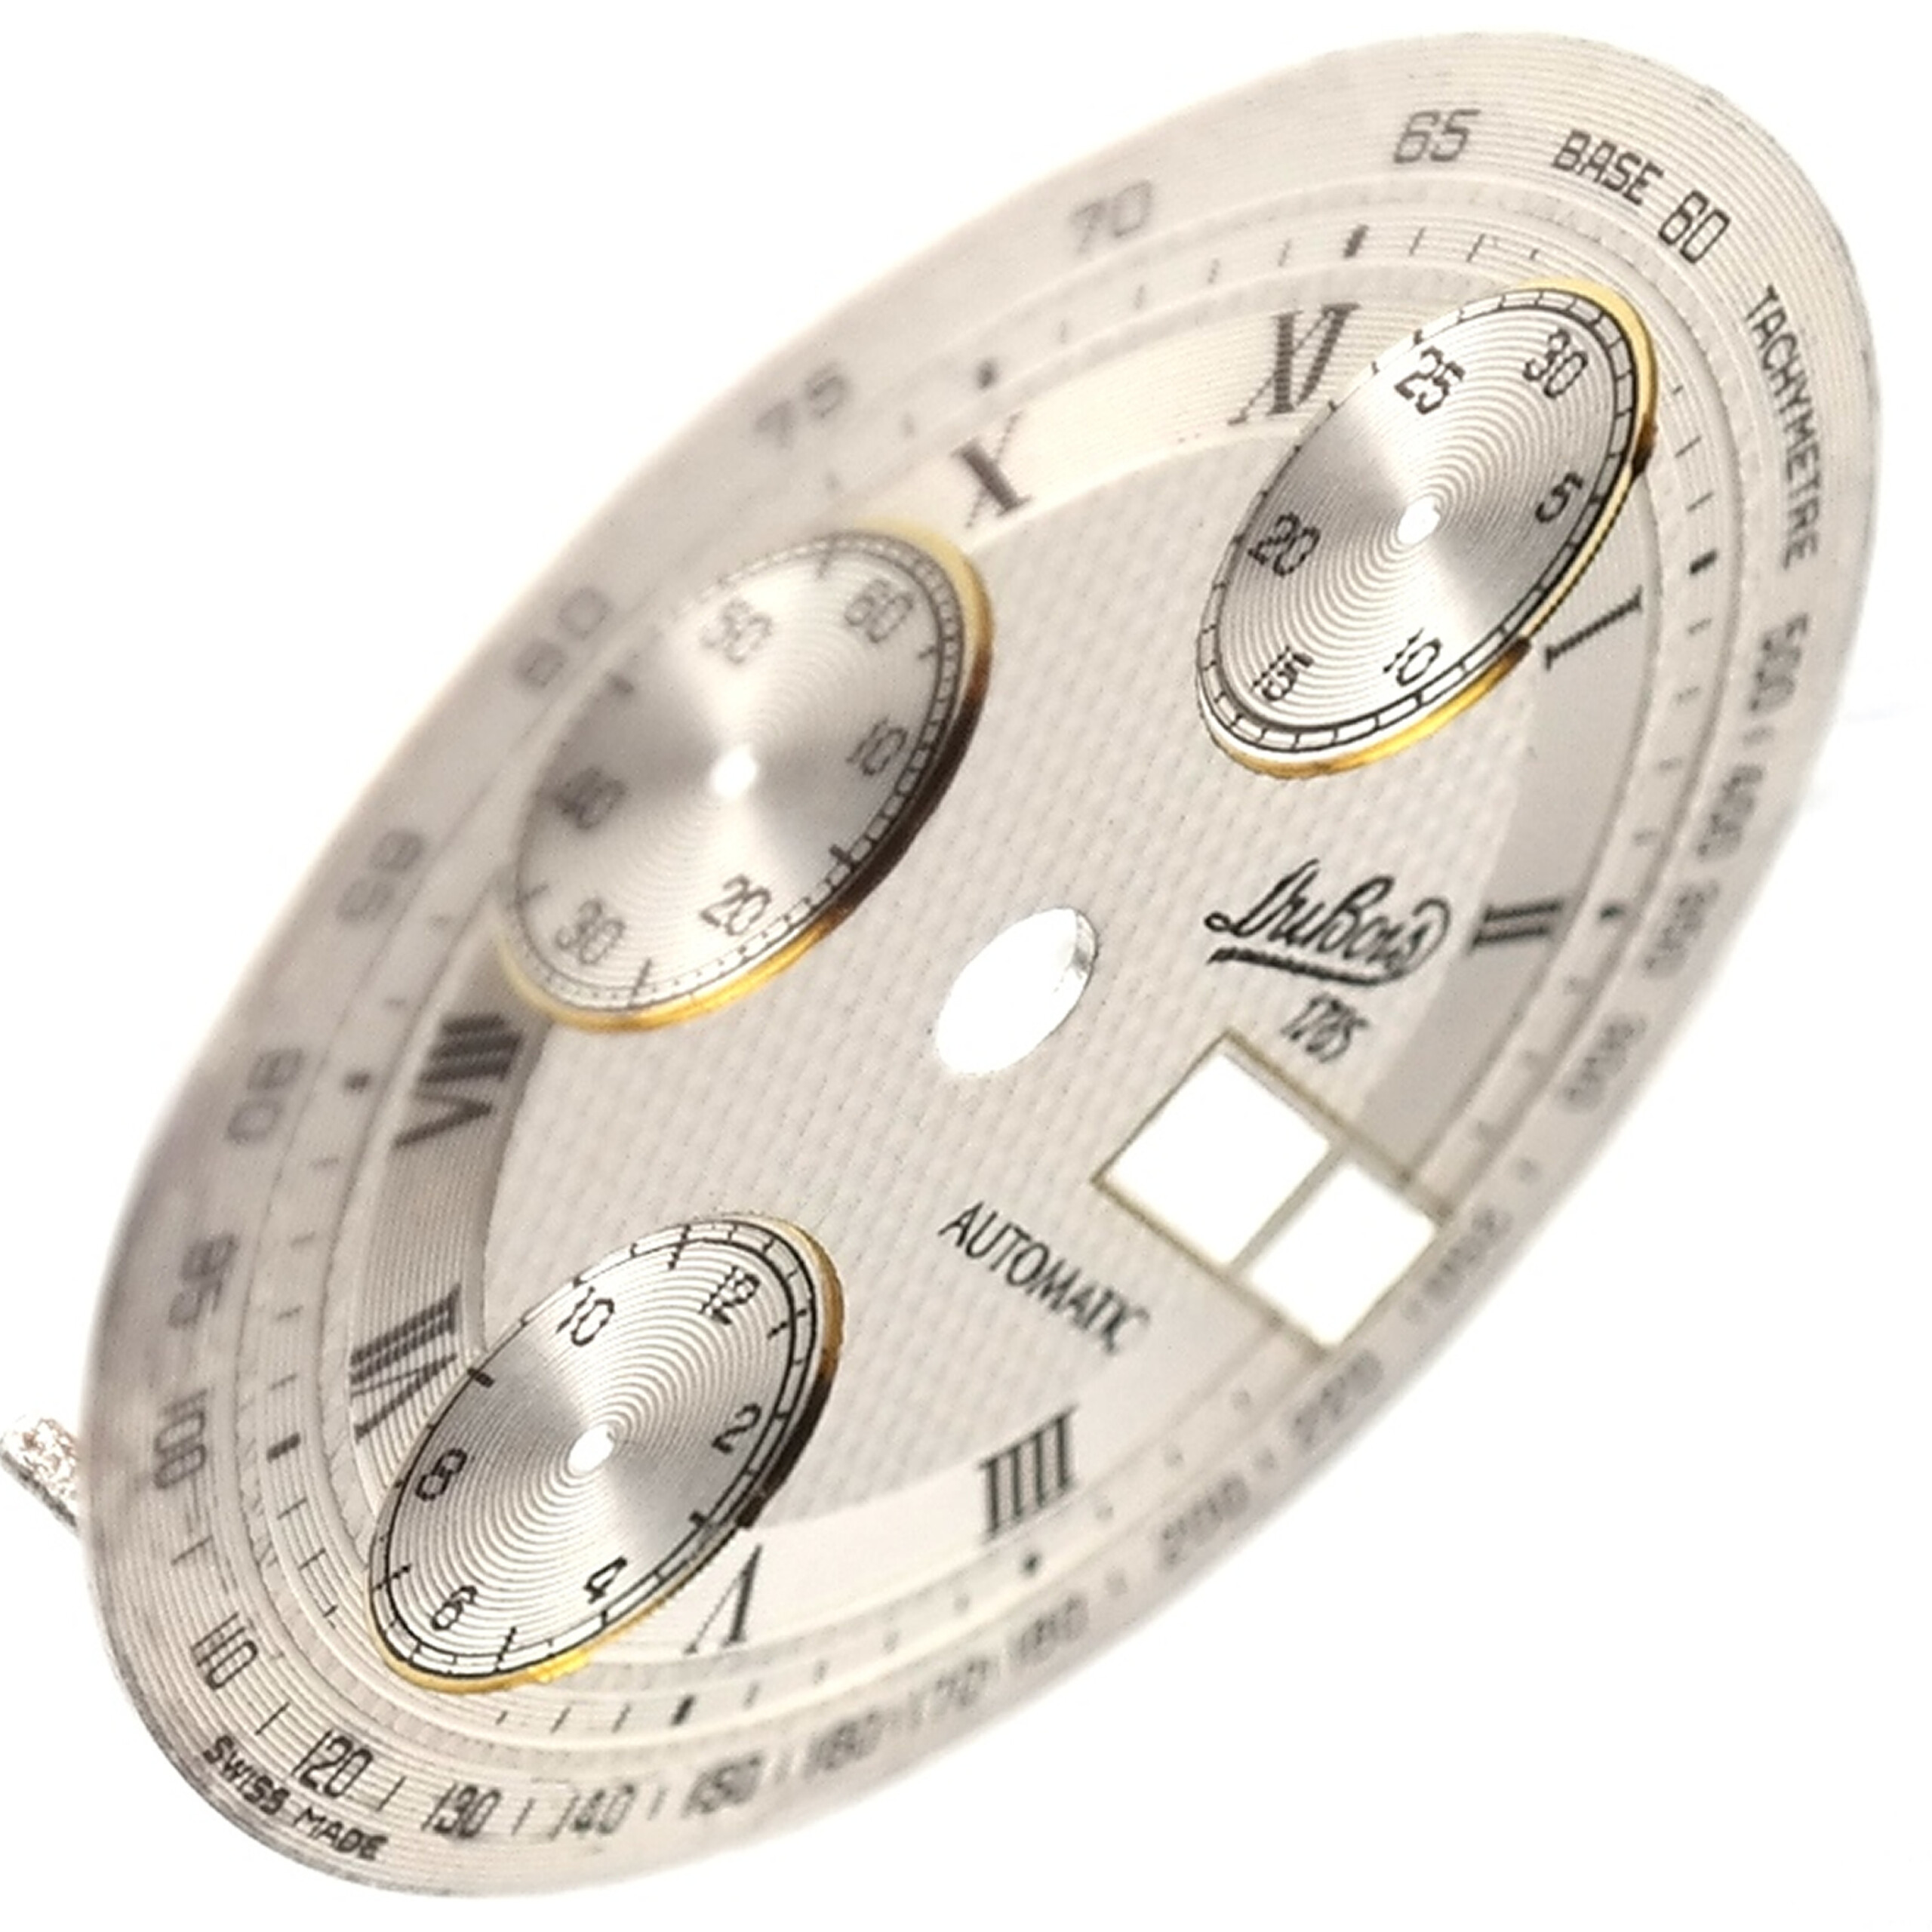 DuBois - Automatic Chronograph -  Watch Dial - ETA/Valjoux 7750 - 29.5 mm